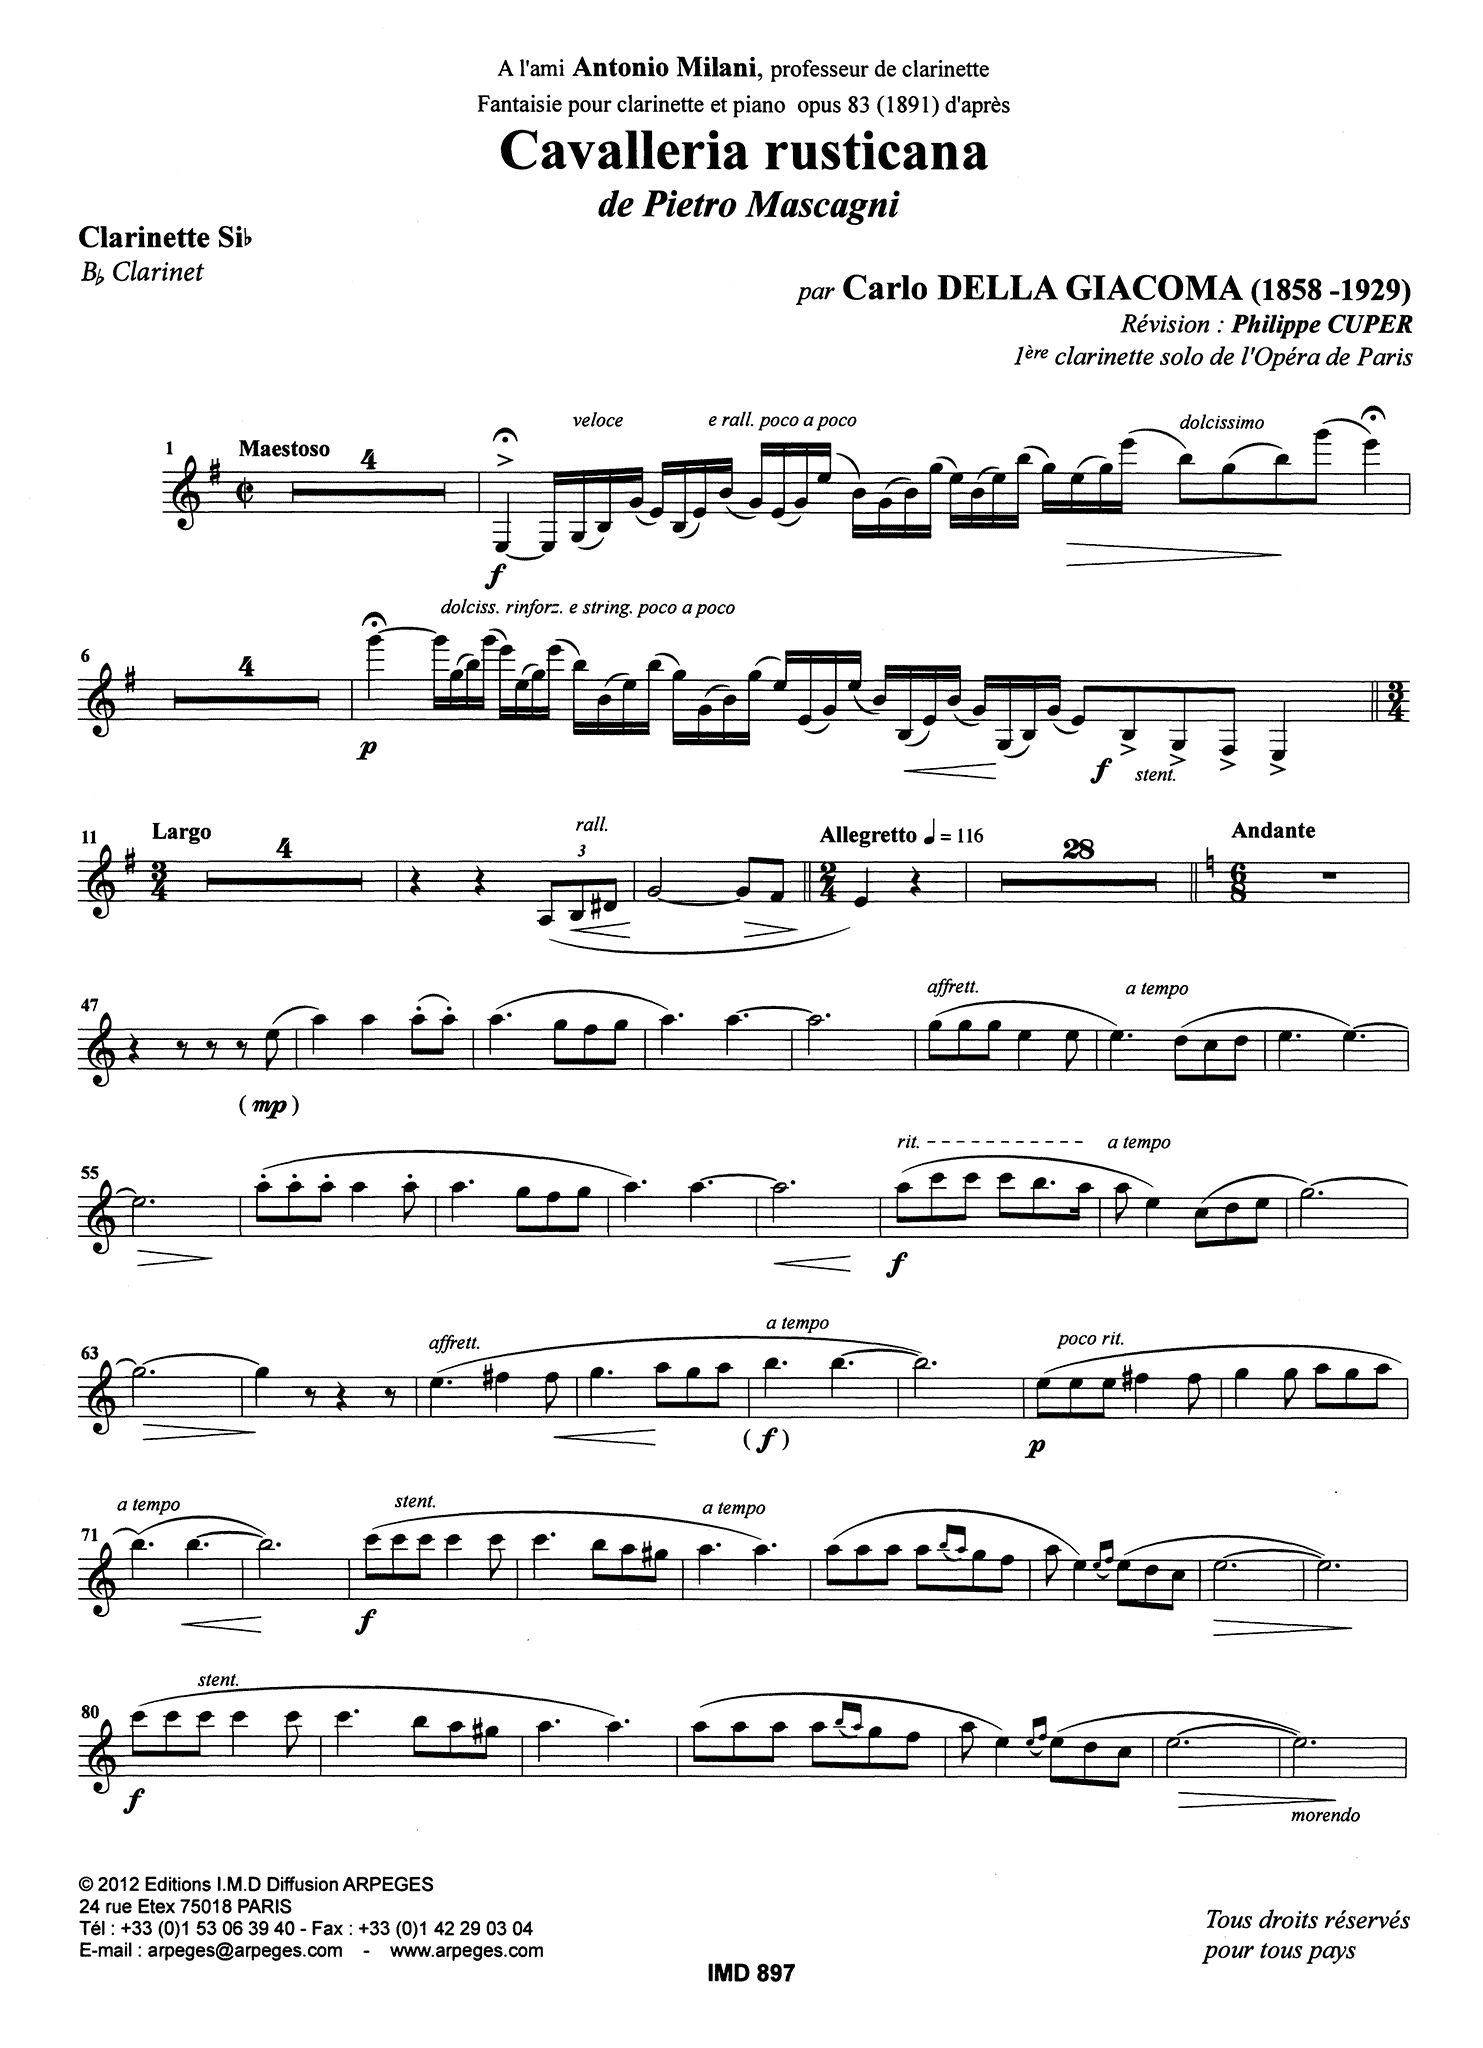 Giacoma Fantasia Cavalleria rusticana Op. 83 Clarinet part